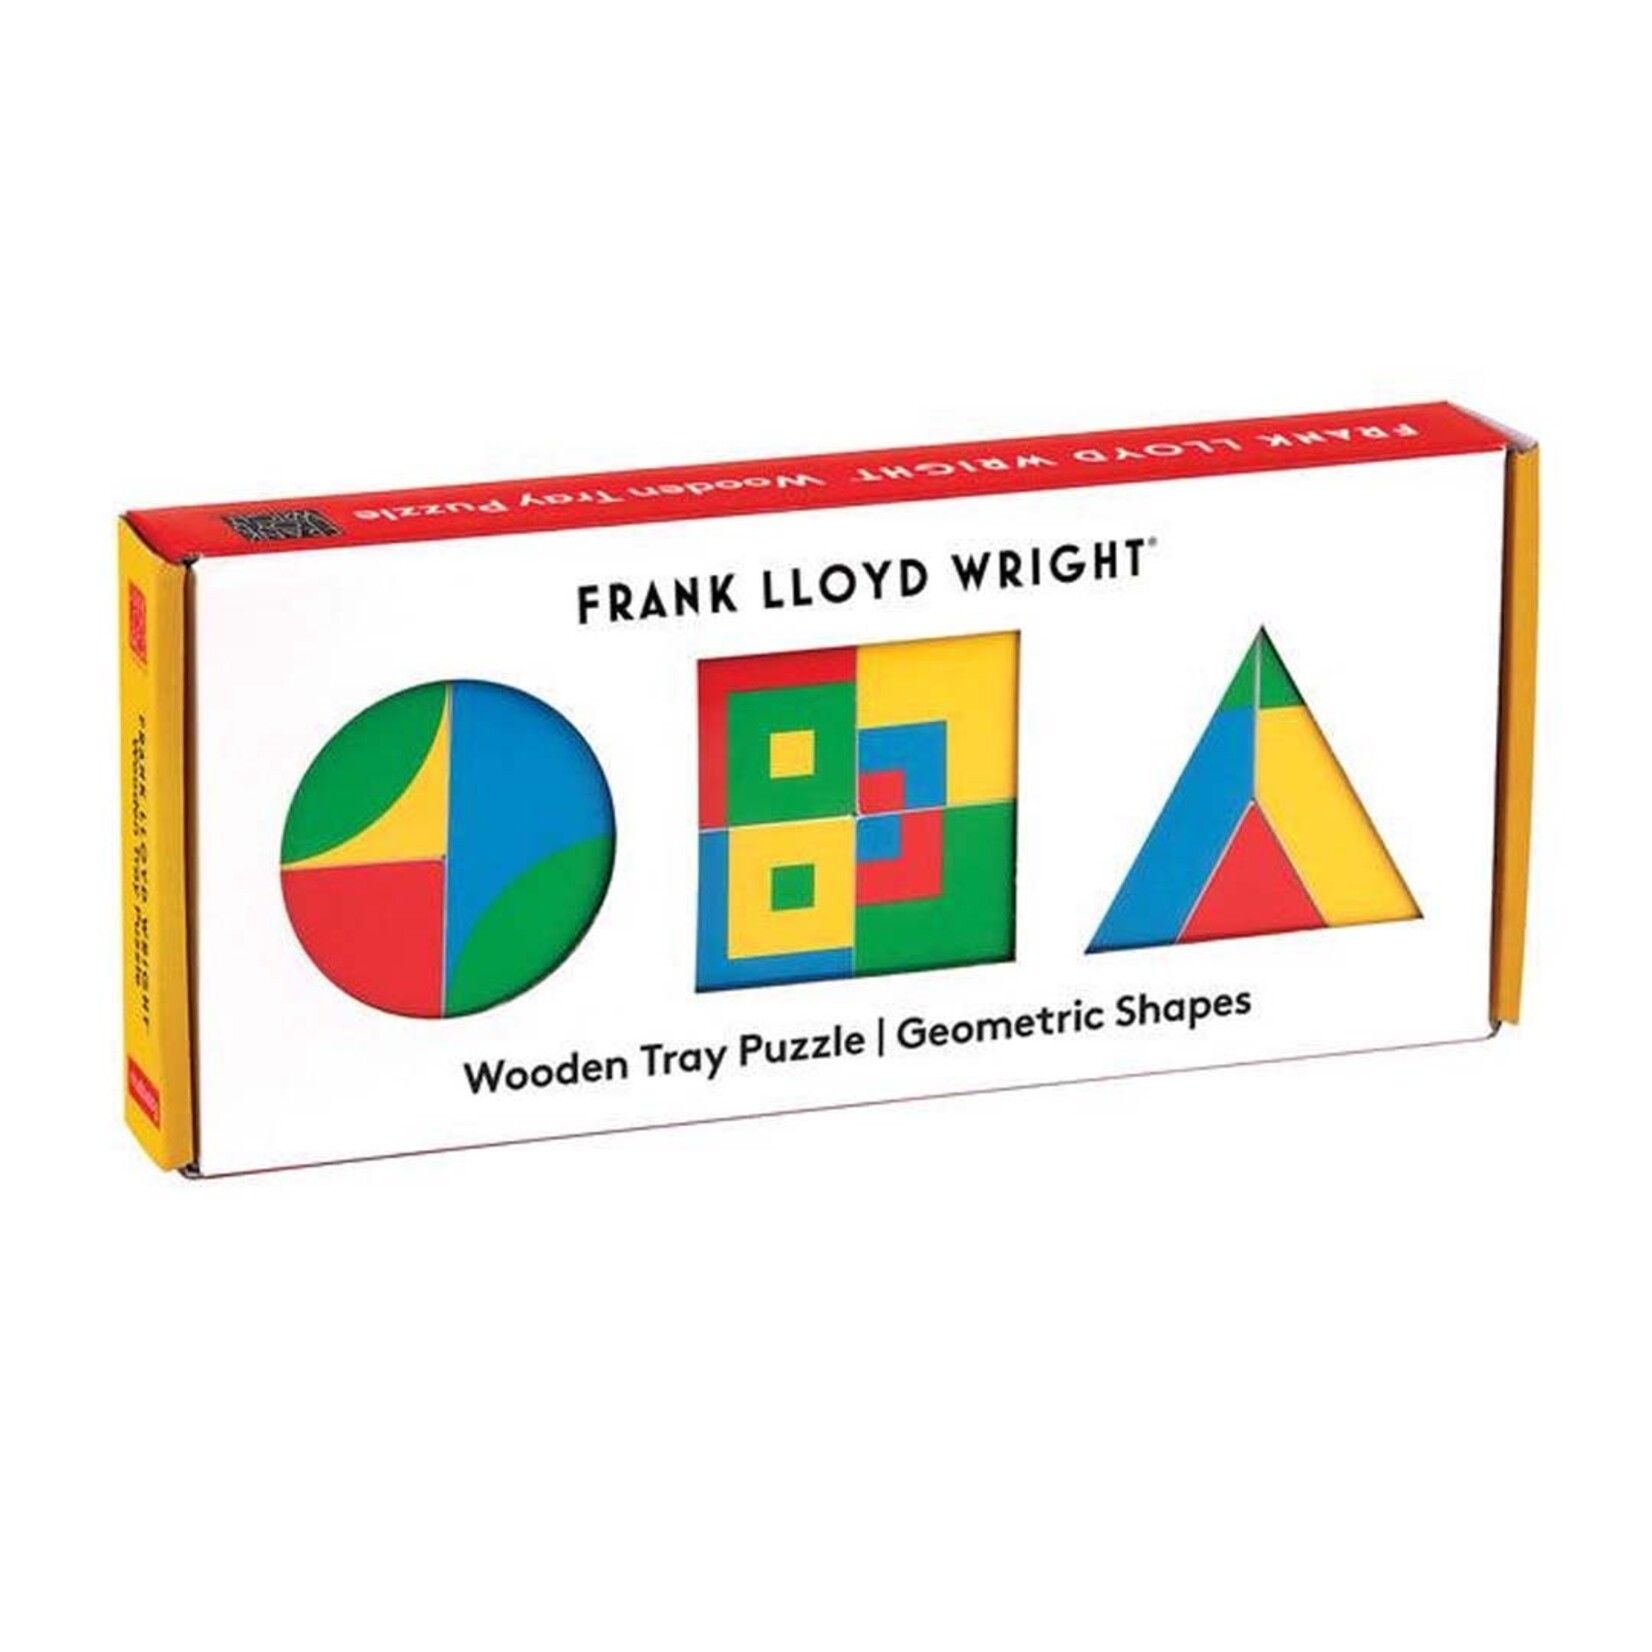 Frank Lloyd Wright Wooden Tray Puzzle